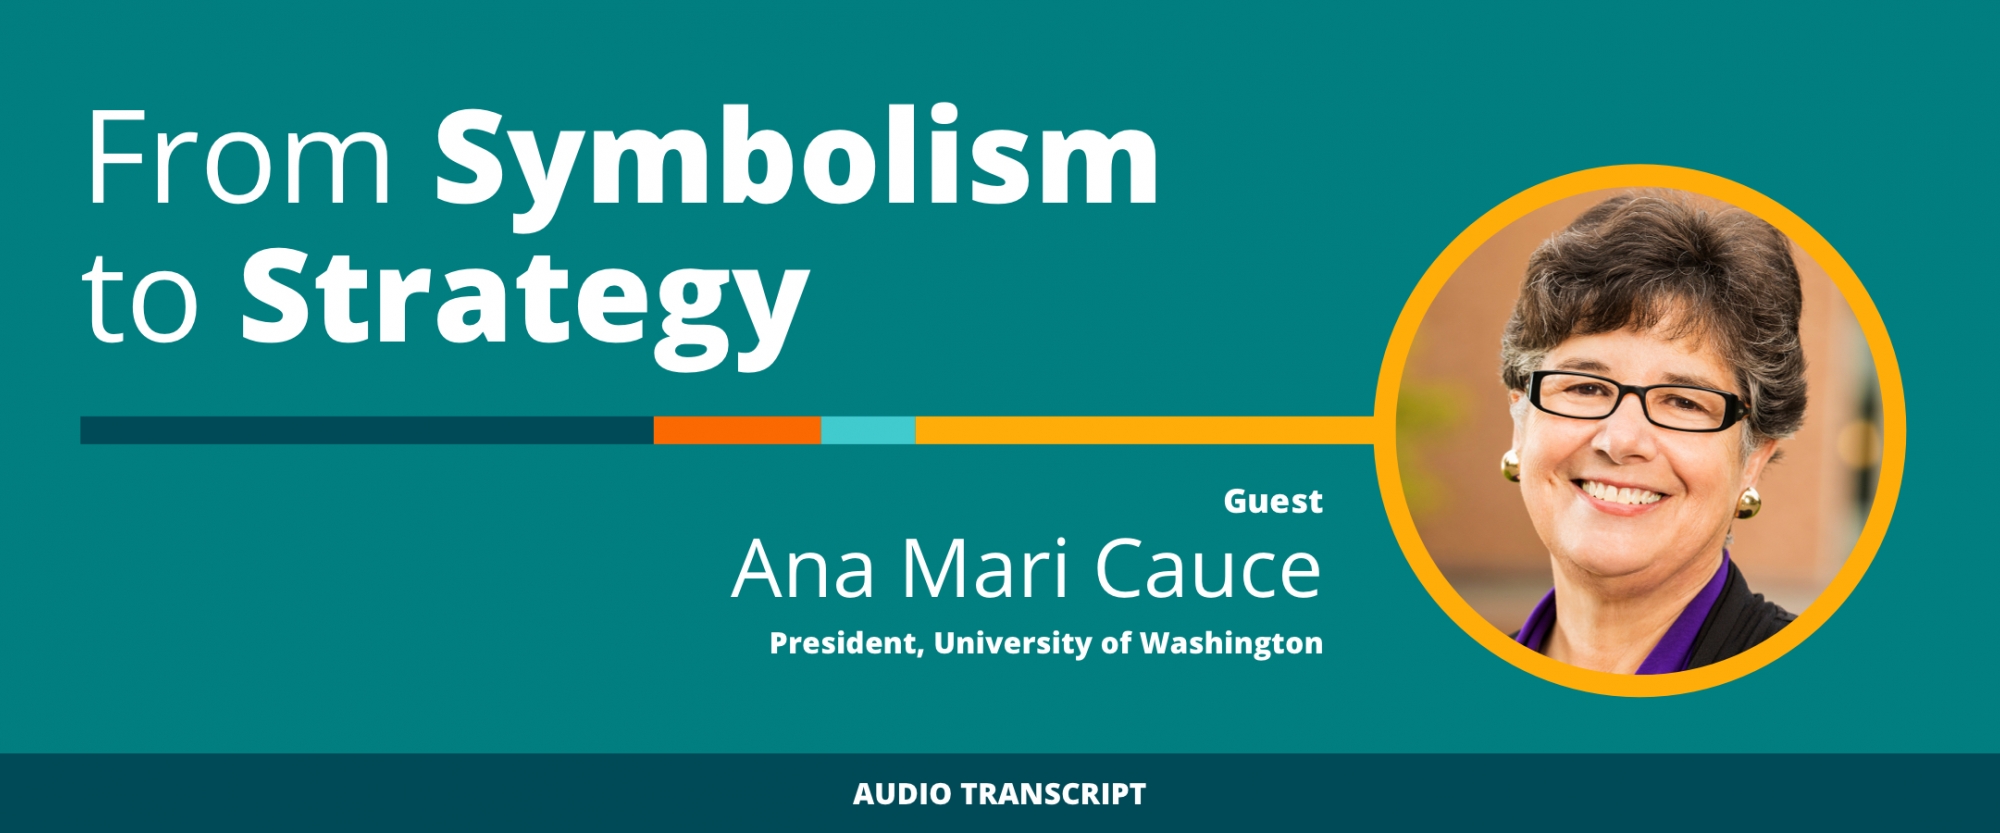 Weekly Wisdom Episode 12: Transcript of Conversation With Ana Mari Cauce, University of Washington President